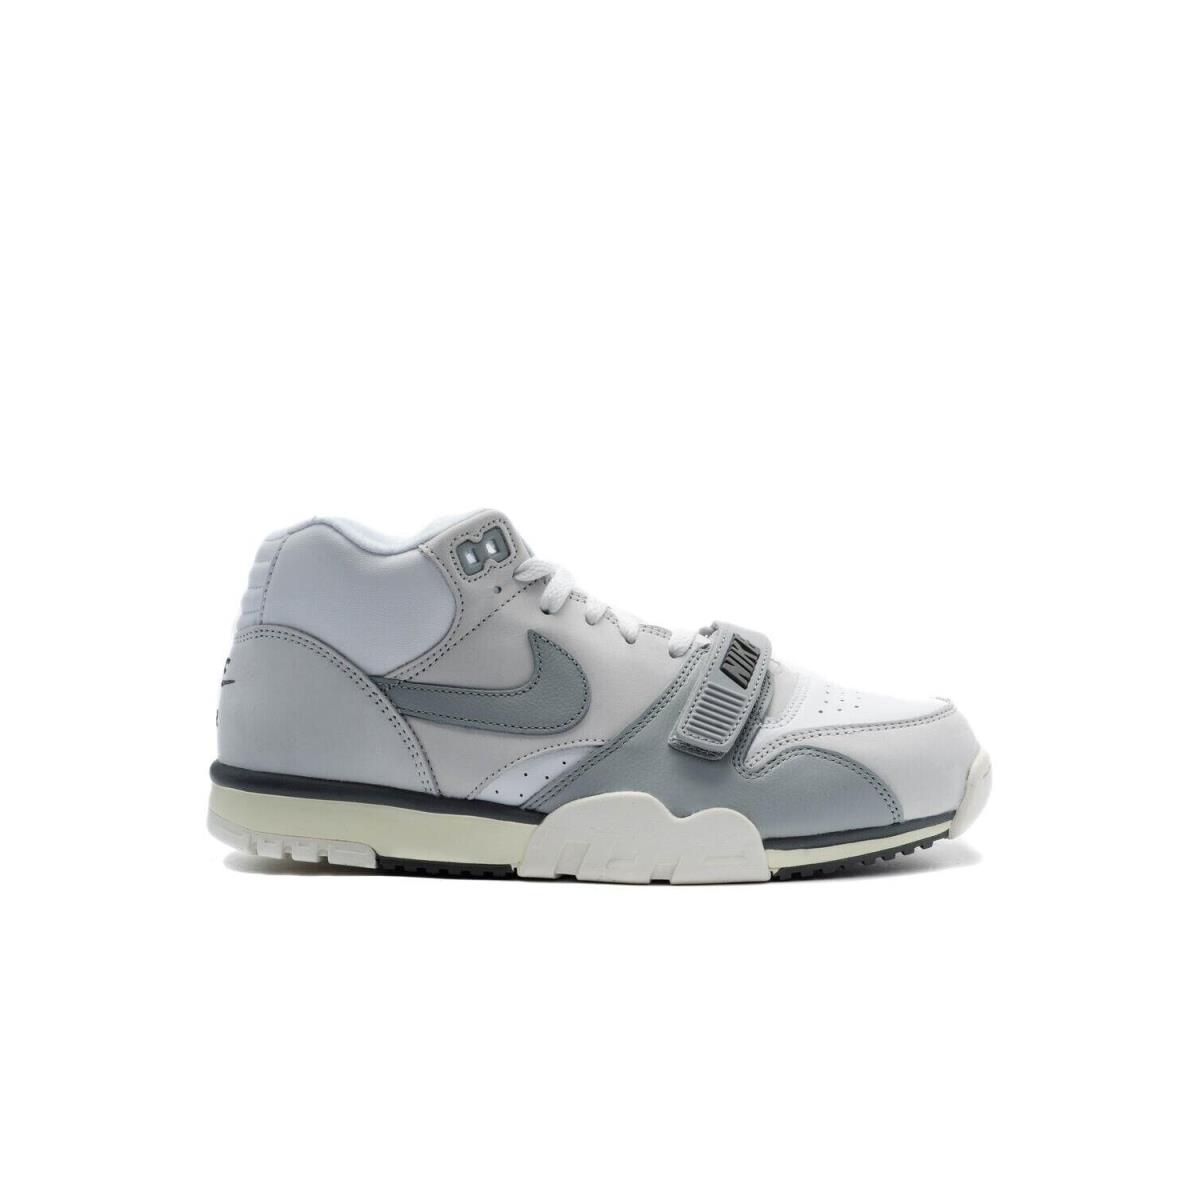 DM0521-001 Nike Men`s Air Trainer 1 Photon Dust LT Smoke Gray Sneakers